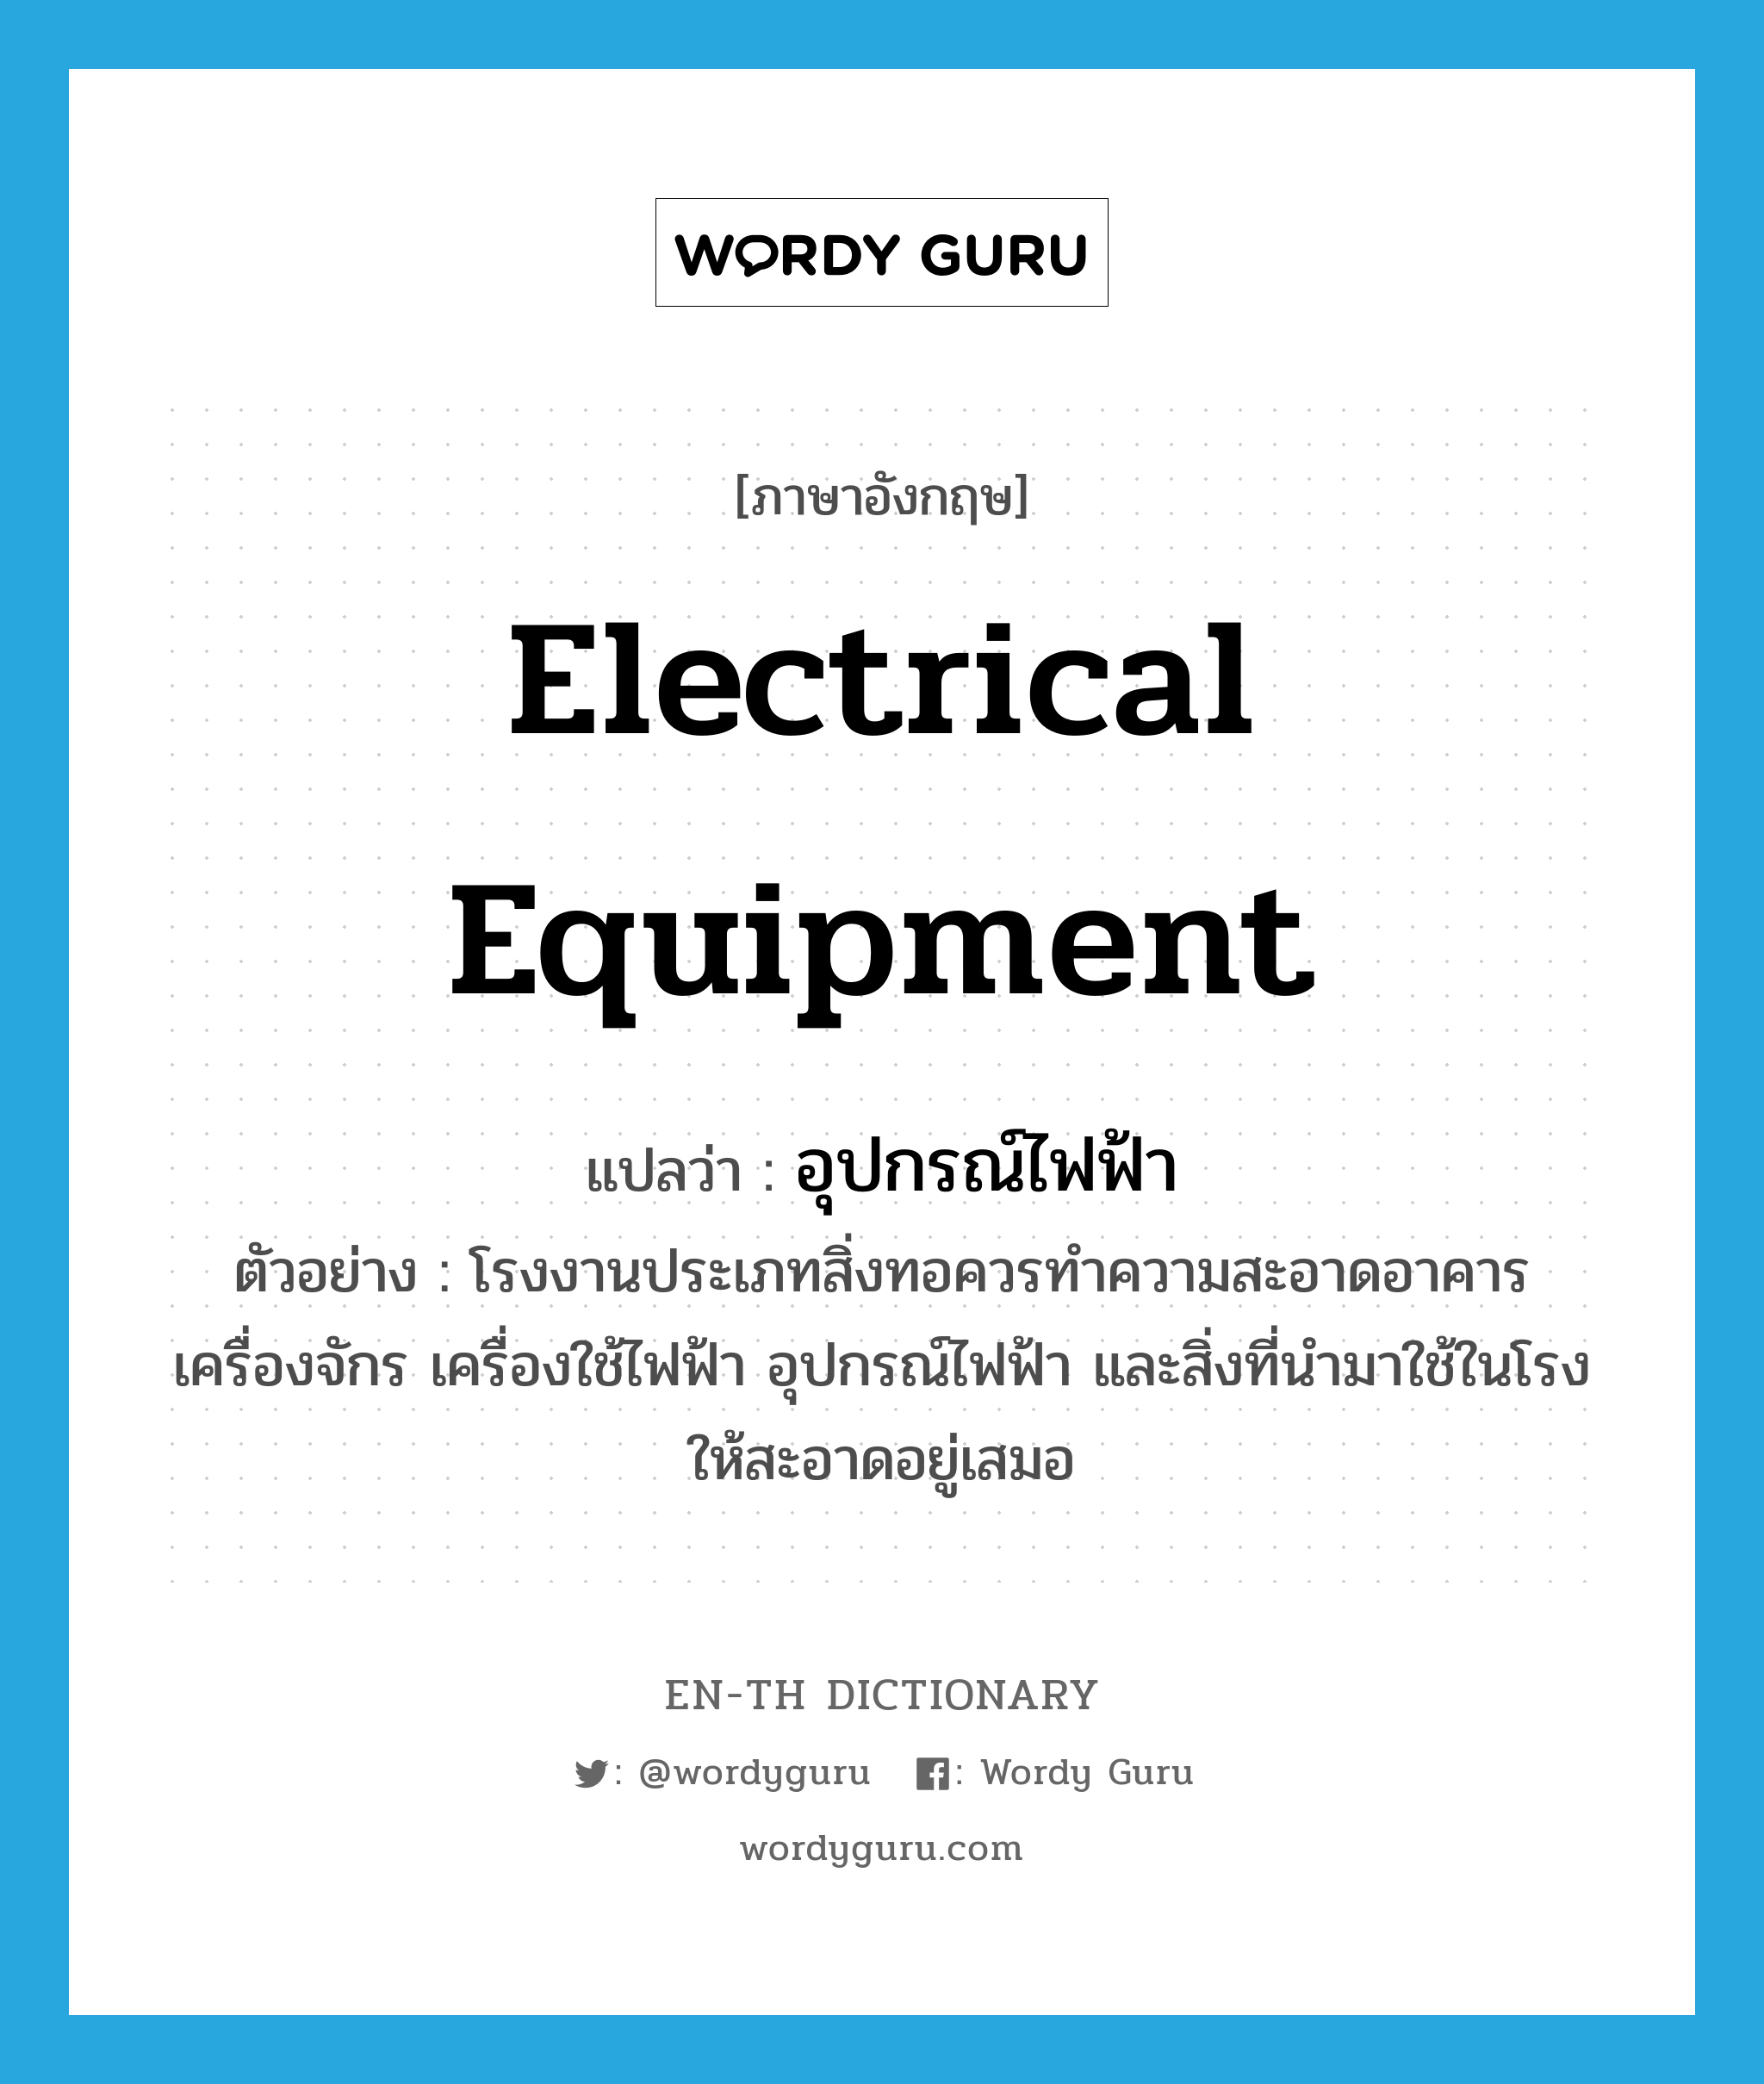 electrical equipment แปลว่า?, คำศัพท์ภาษาอังกฤษ electrical equipment แปลว่า อุปกรณ์ไฟฟ้า ประเภท N ตัวอย่าง โรงงานประเภทสิ่งทอควรทำความสะอาดอาคาร เครื่องจักร เครื่องใช้ไฟฟ้า อุปกรณ์ไฟฟ้า และสิ่งที่นำมาใช้ในโรงให้สะอาดอยู่เสมอ หมวด N